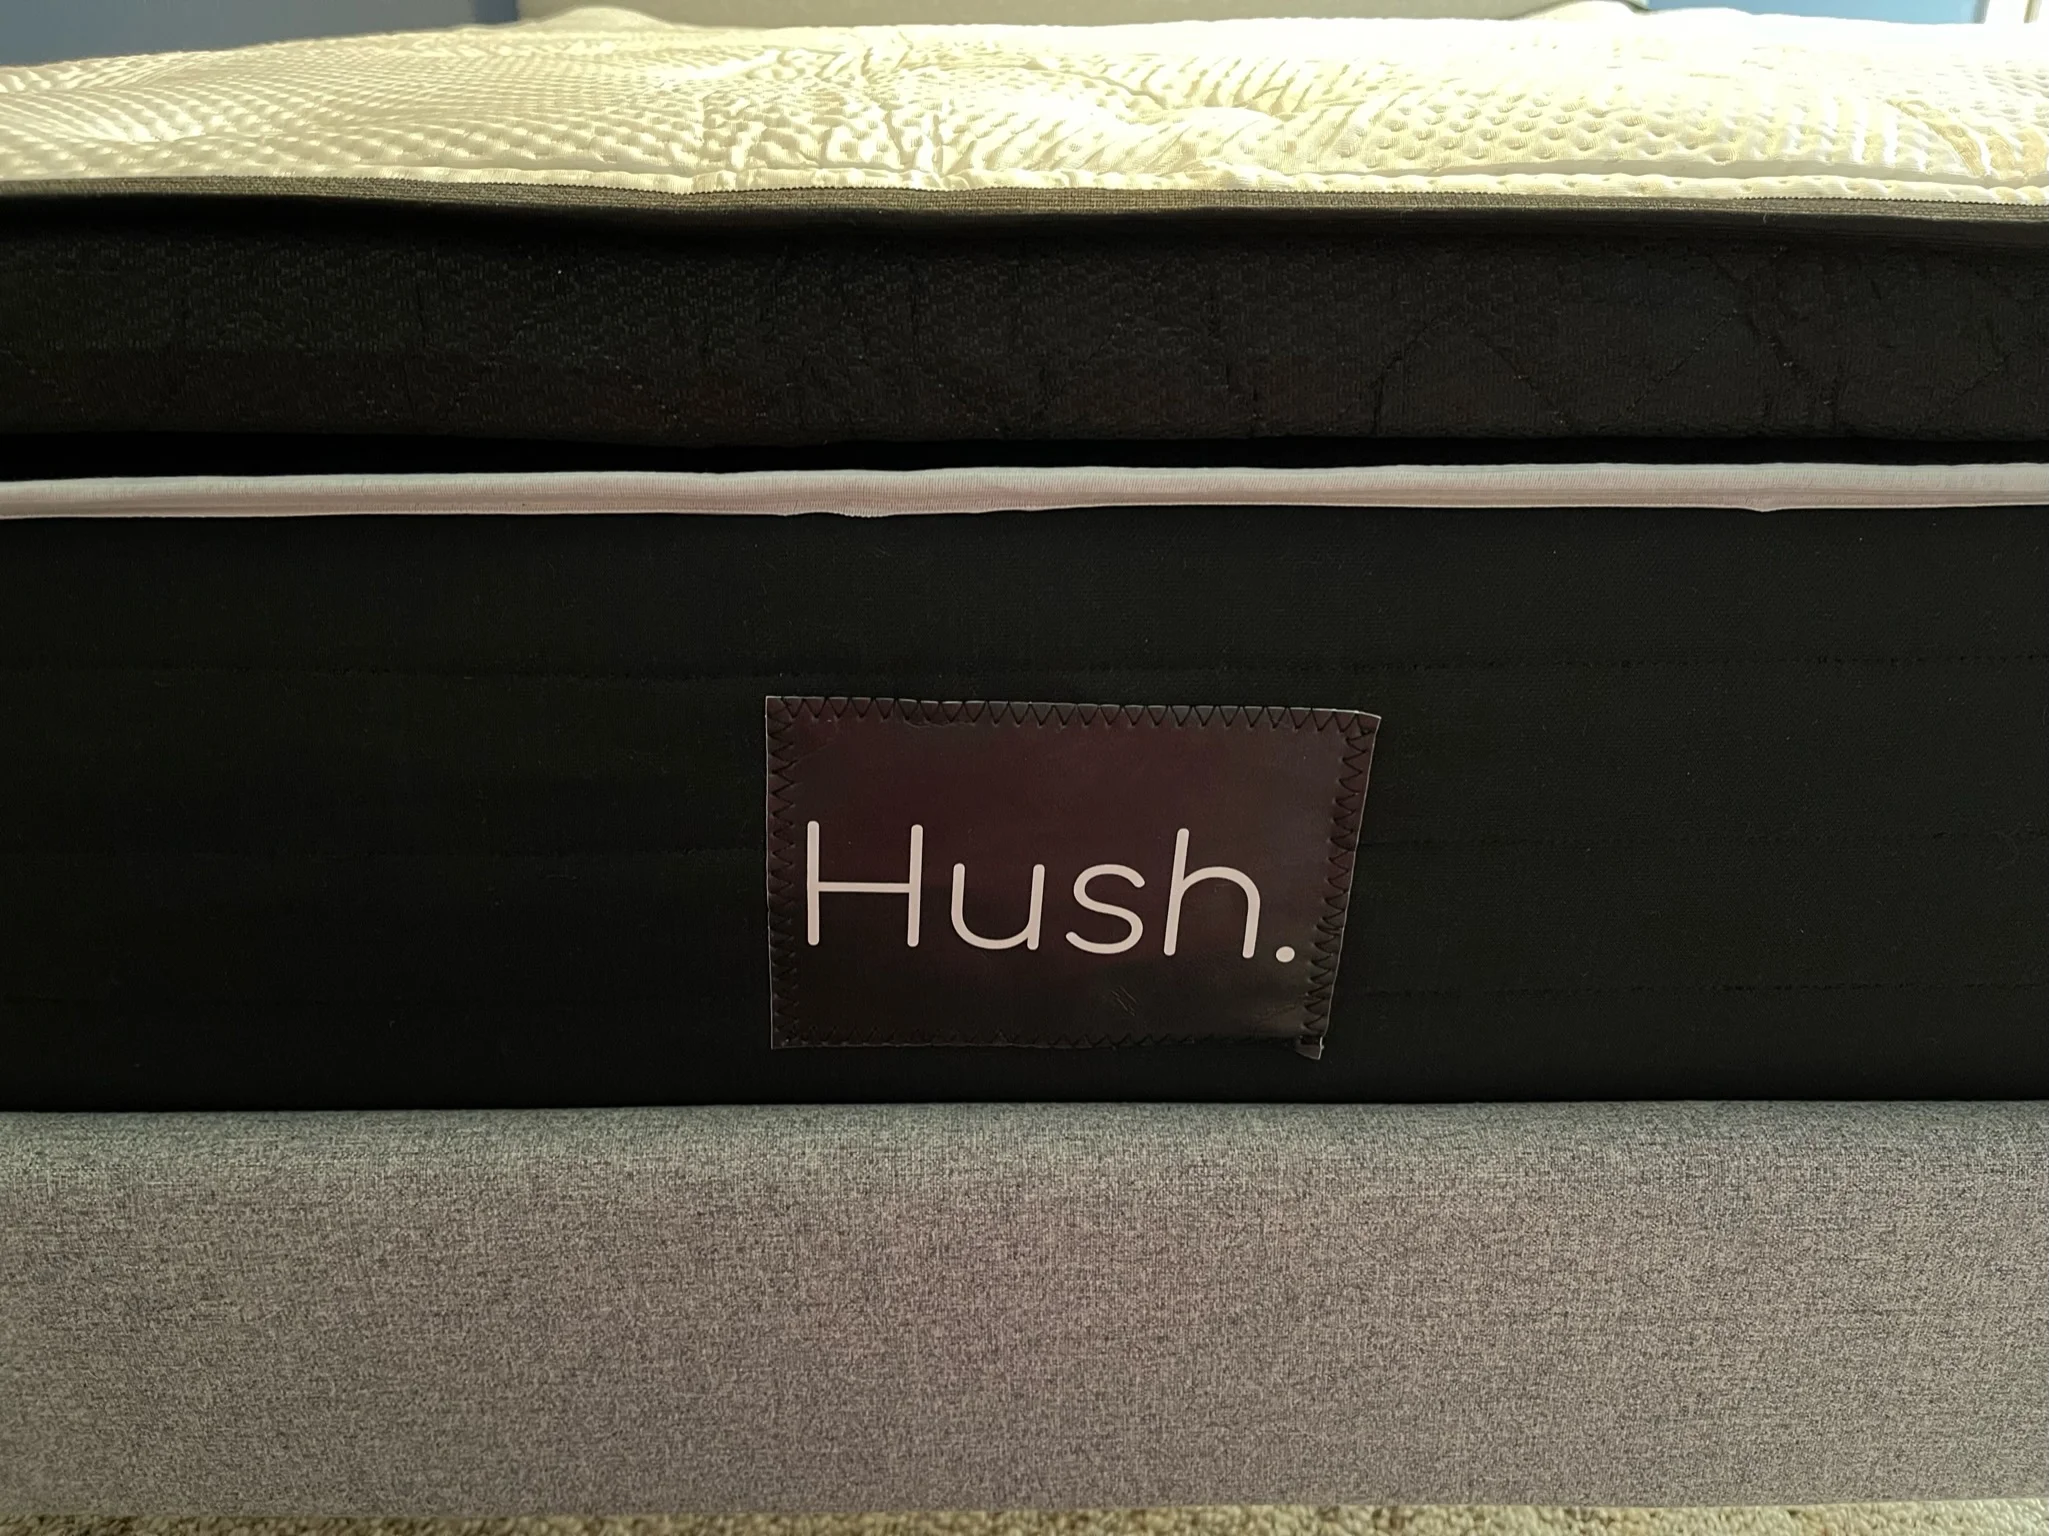 hush arctic luxe hybrid mattress review